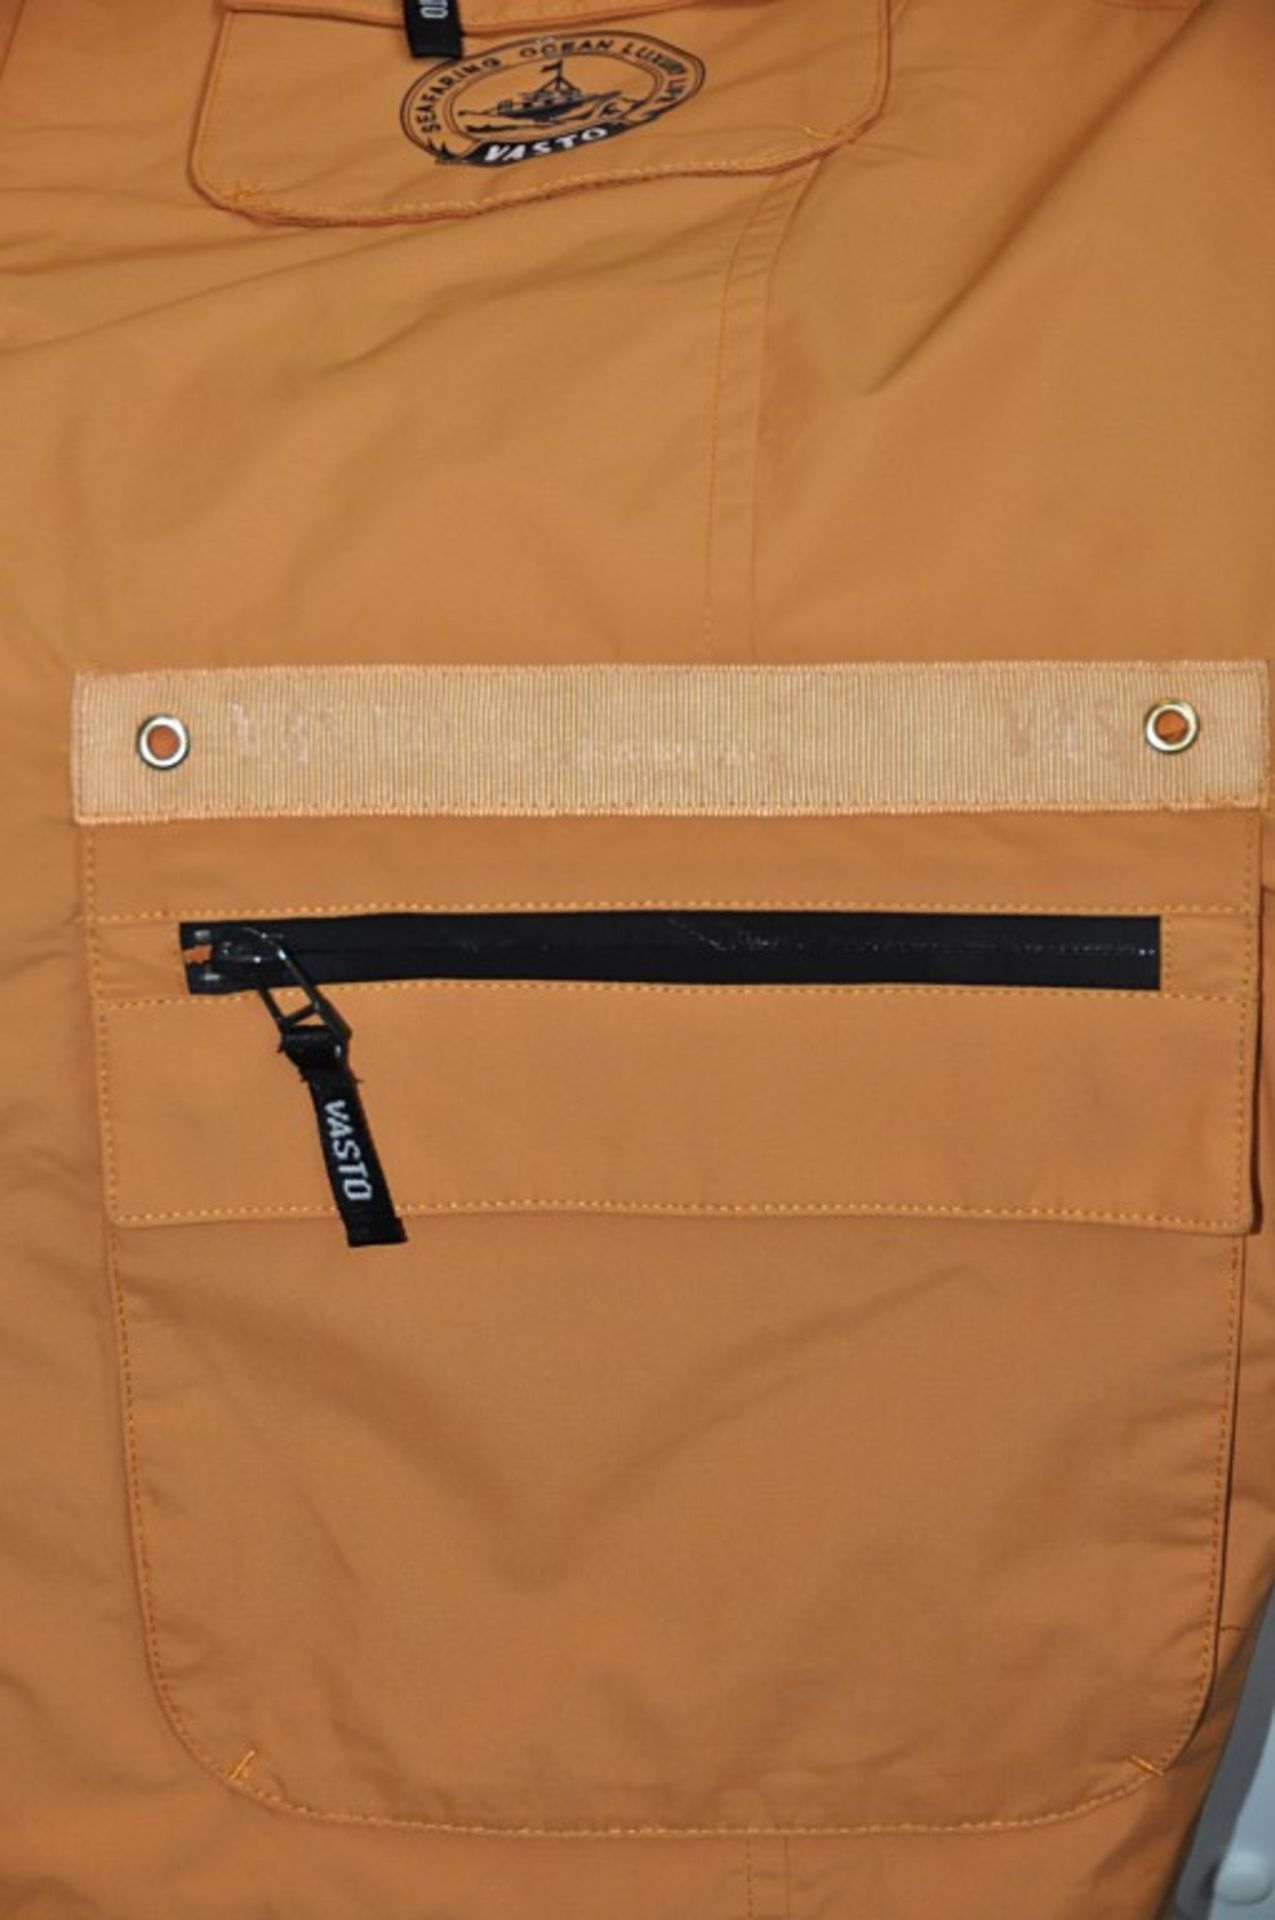 1 x Men's Hooded Seafaring Jacket By International Luxury Brand "Vasto" (SAZ7231/421) – Size: - Image 5 of 8